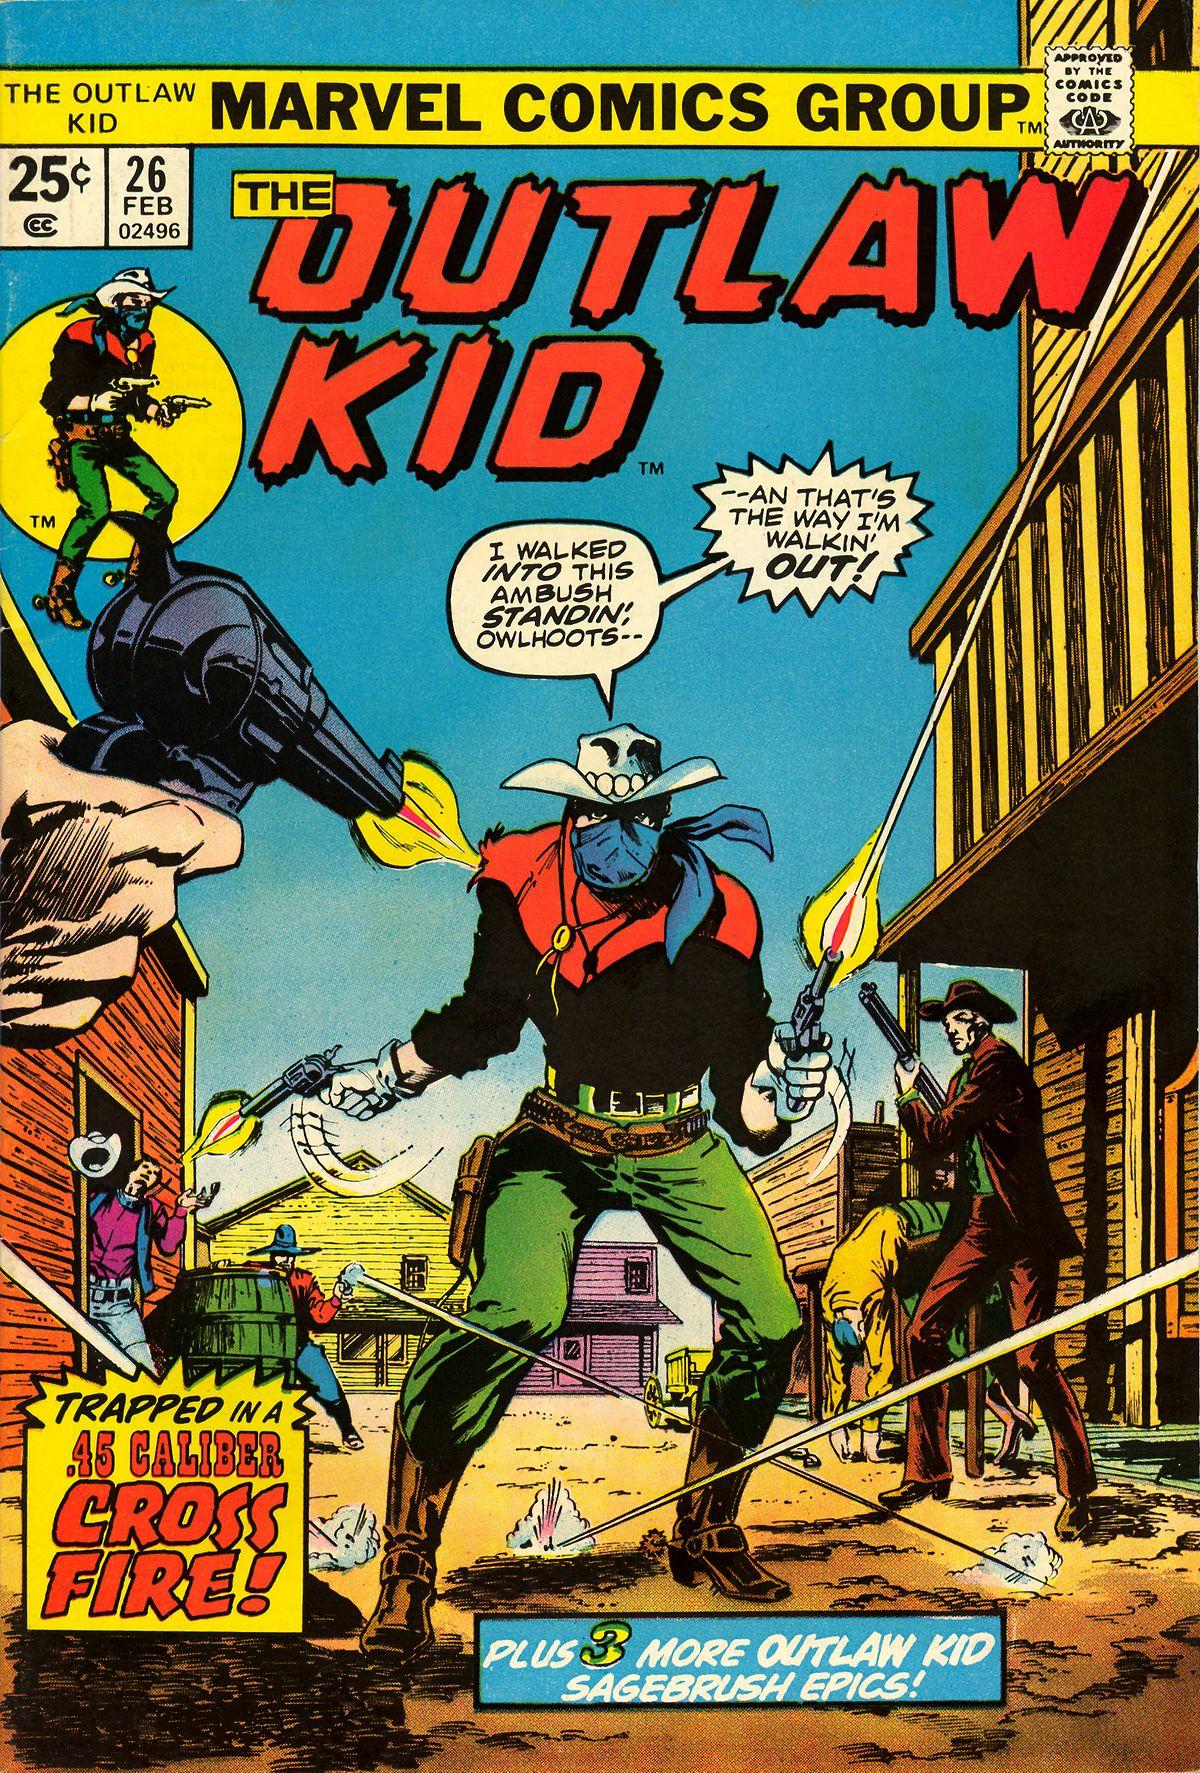 Outlaw Kid Vol. 2 #26